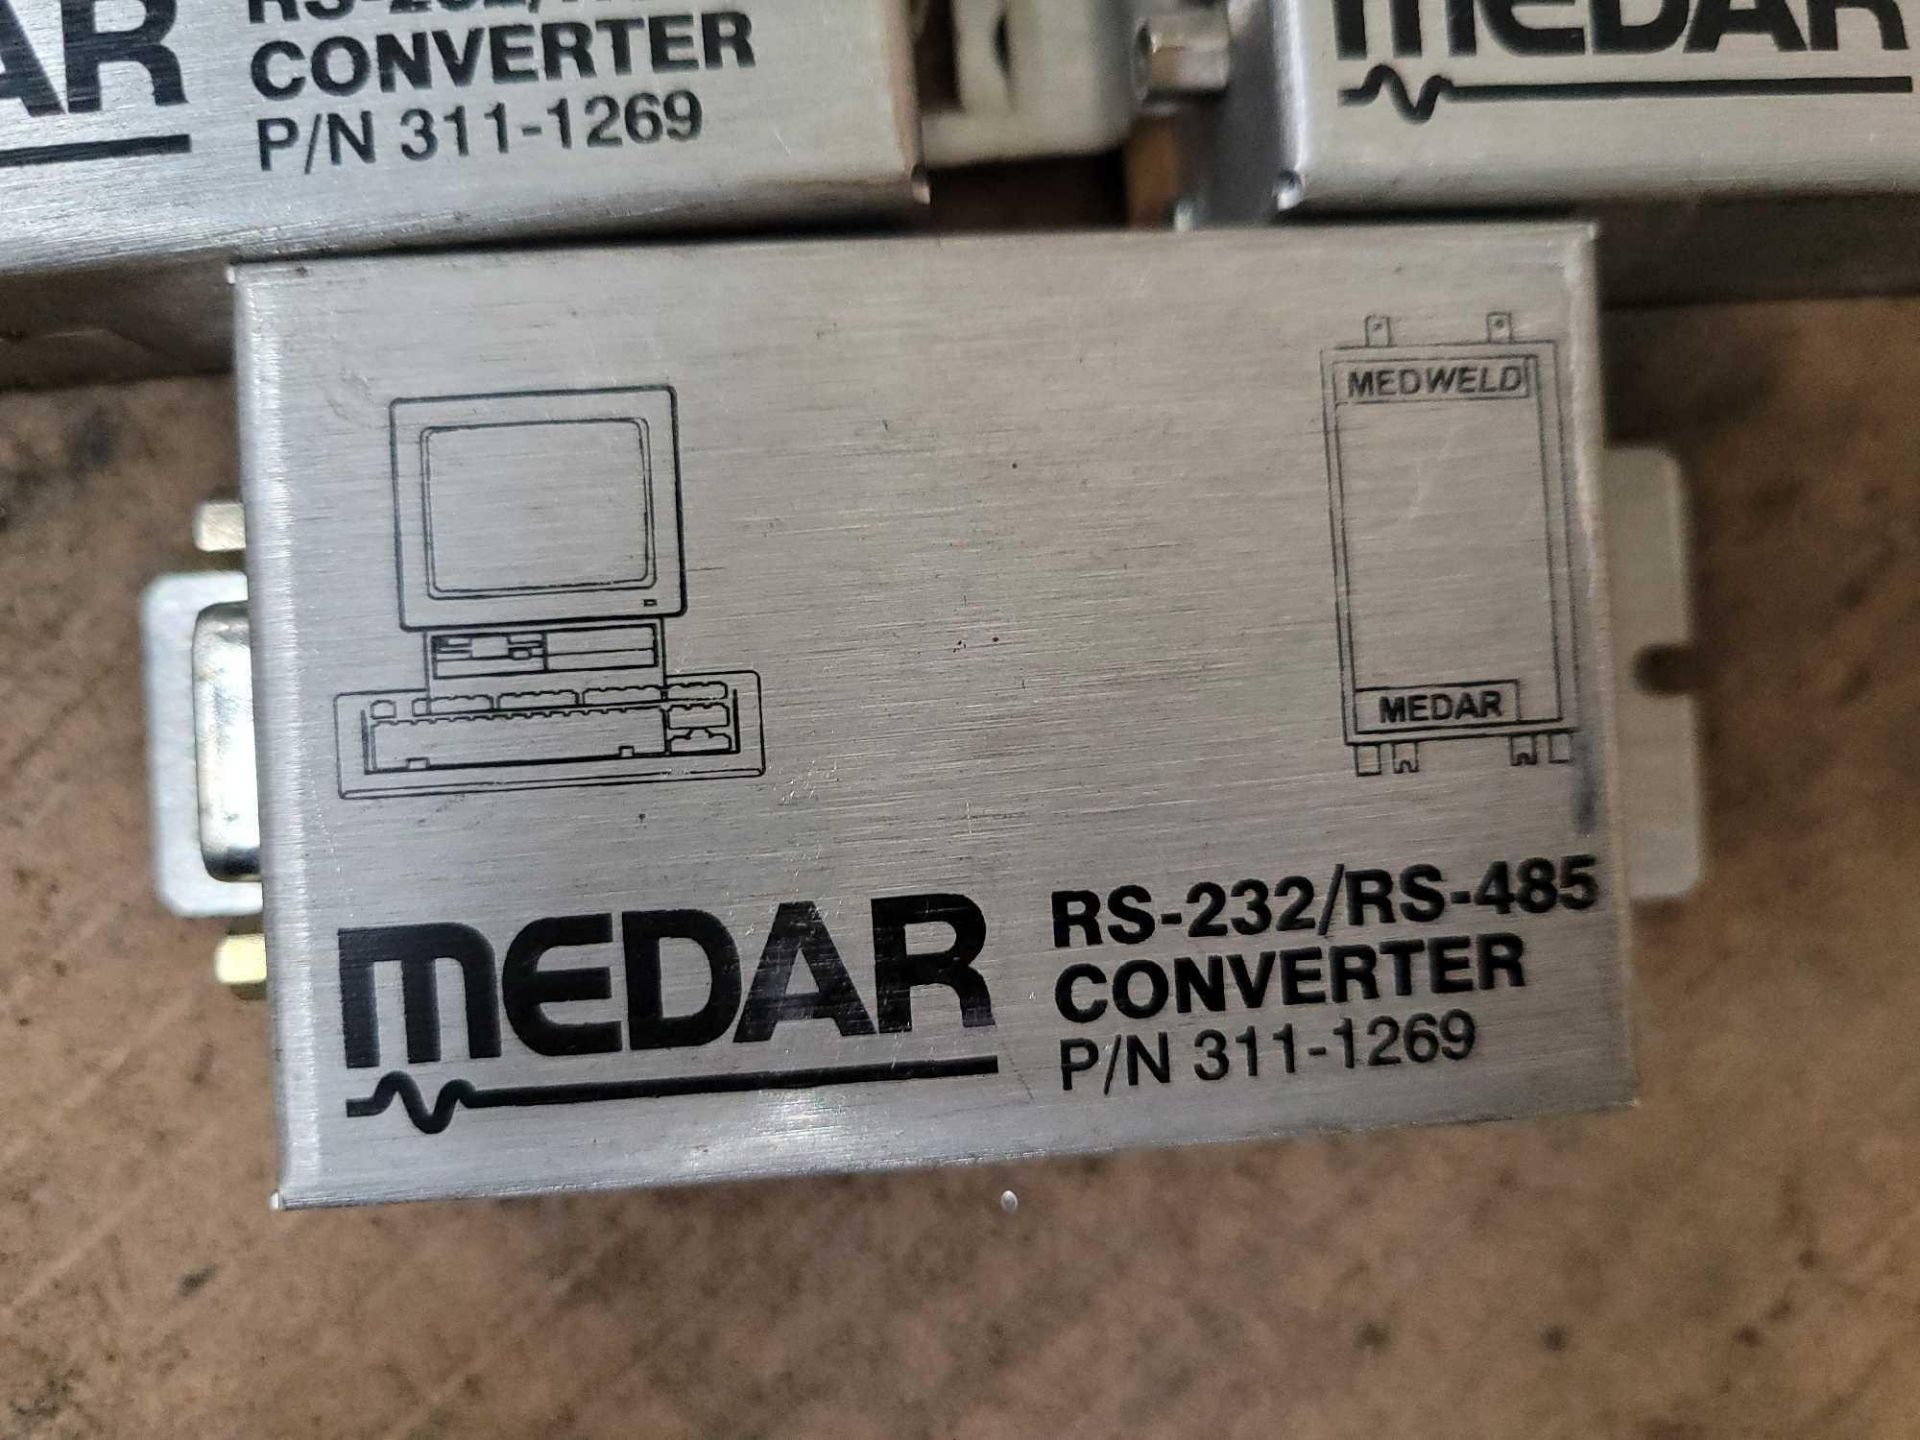 LOT OF 15 MEDAR 311-1269 RS-232/RS-485 CONVERTER - Image 3 of 3